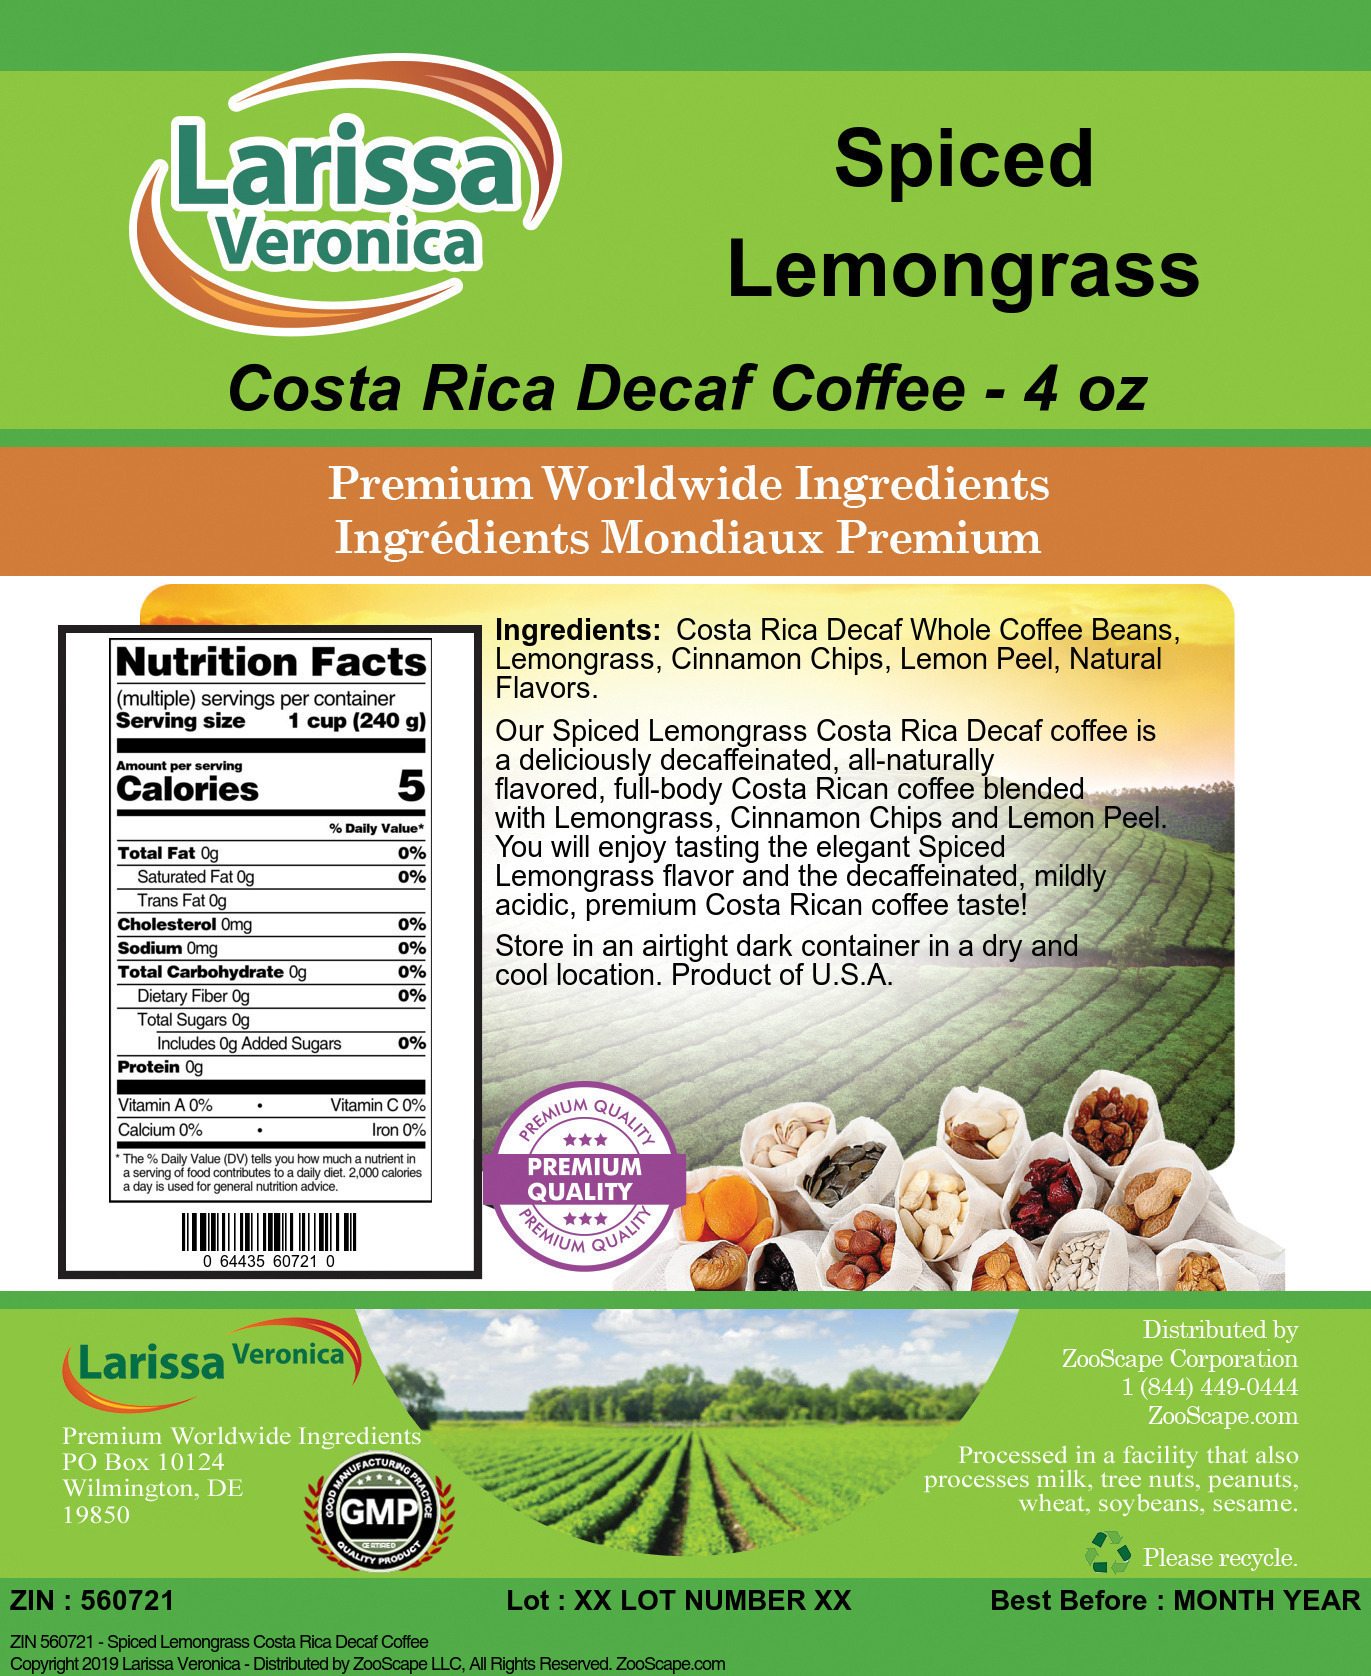 Spiced Lemongrass Costa Rica Decaf Coffee - Label